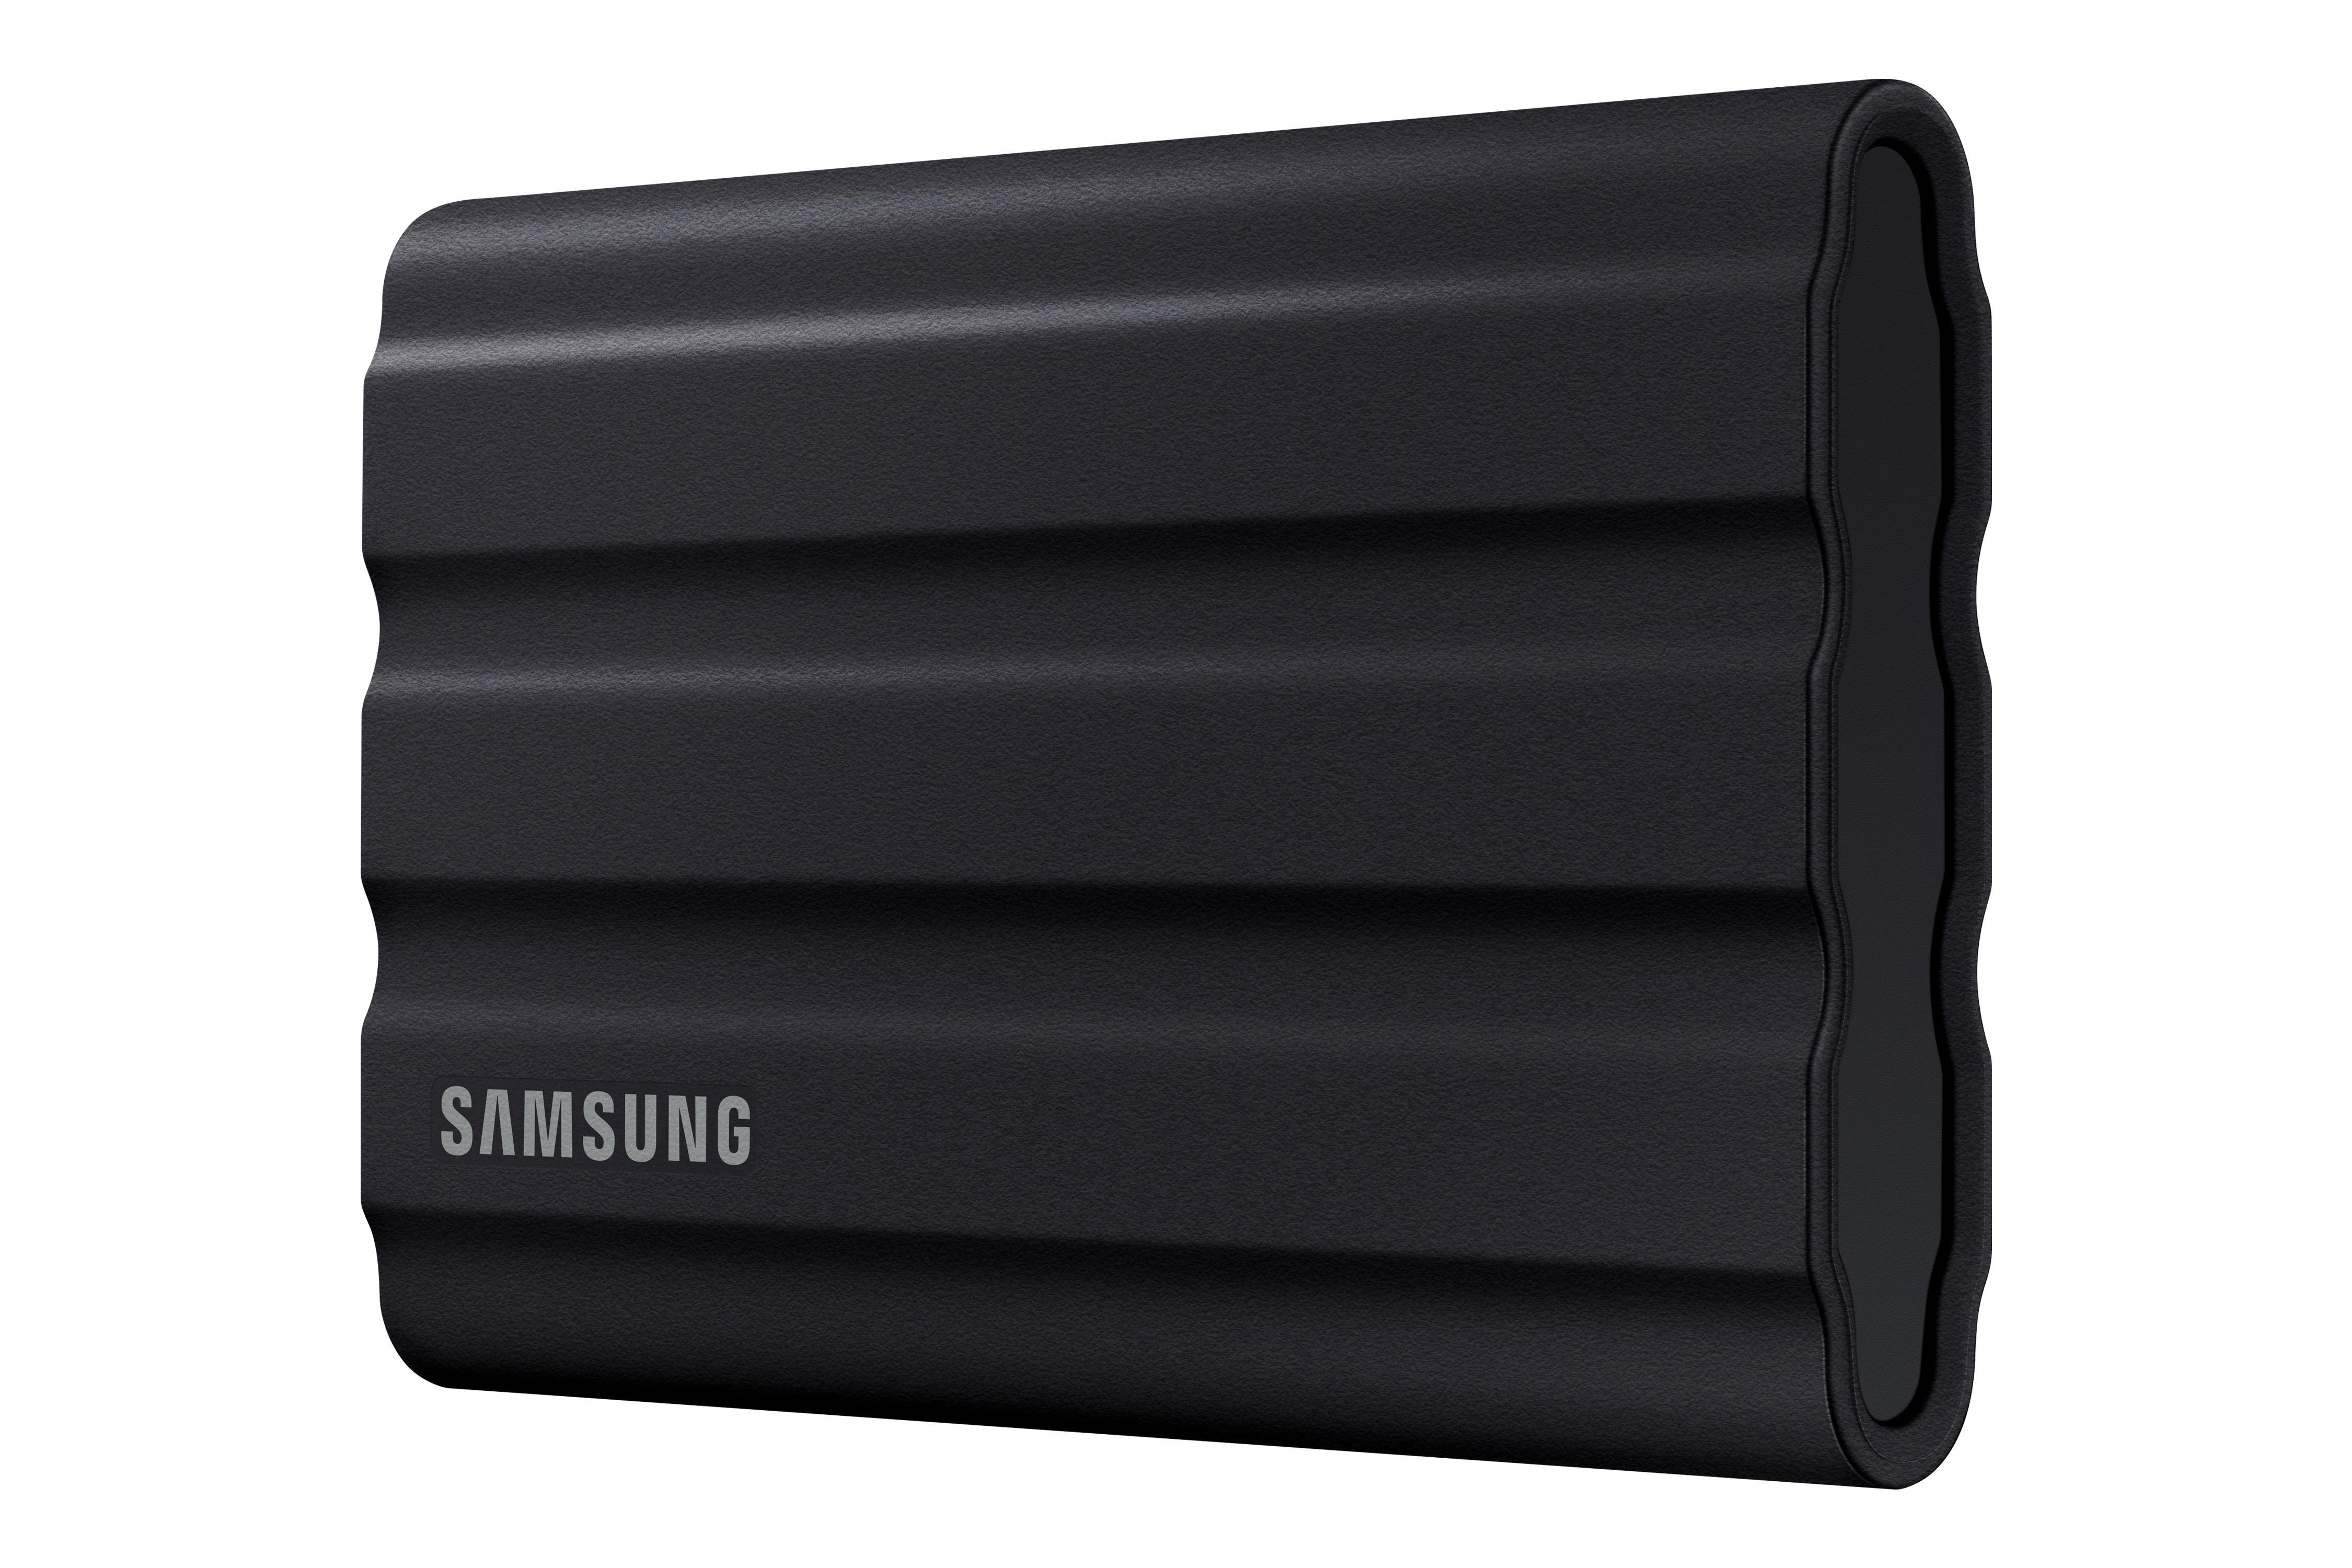 SAMSUNG Portable SSD T7 Schwarz Shield 2 Festplatte, SSD, extern, TB PC/Mac